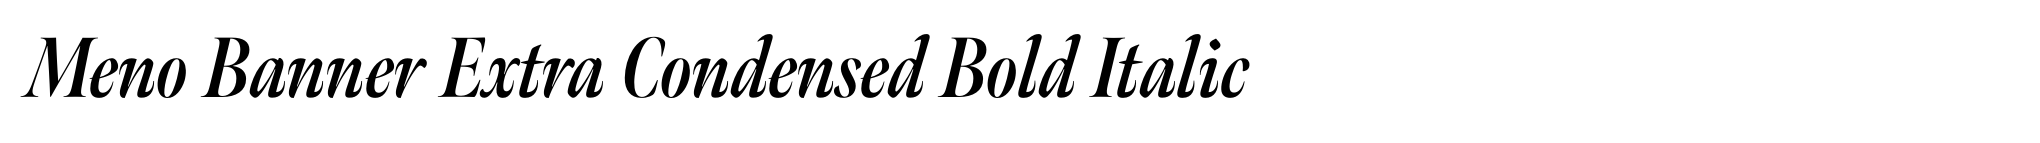 Meno Banner Extra Condensed Bold Italic image